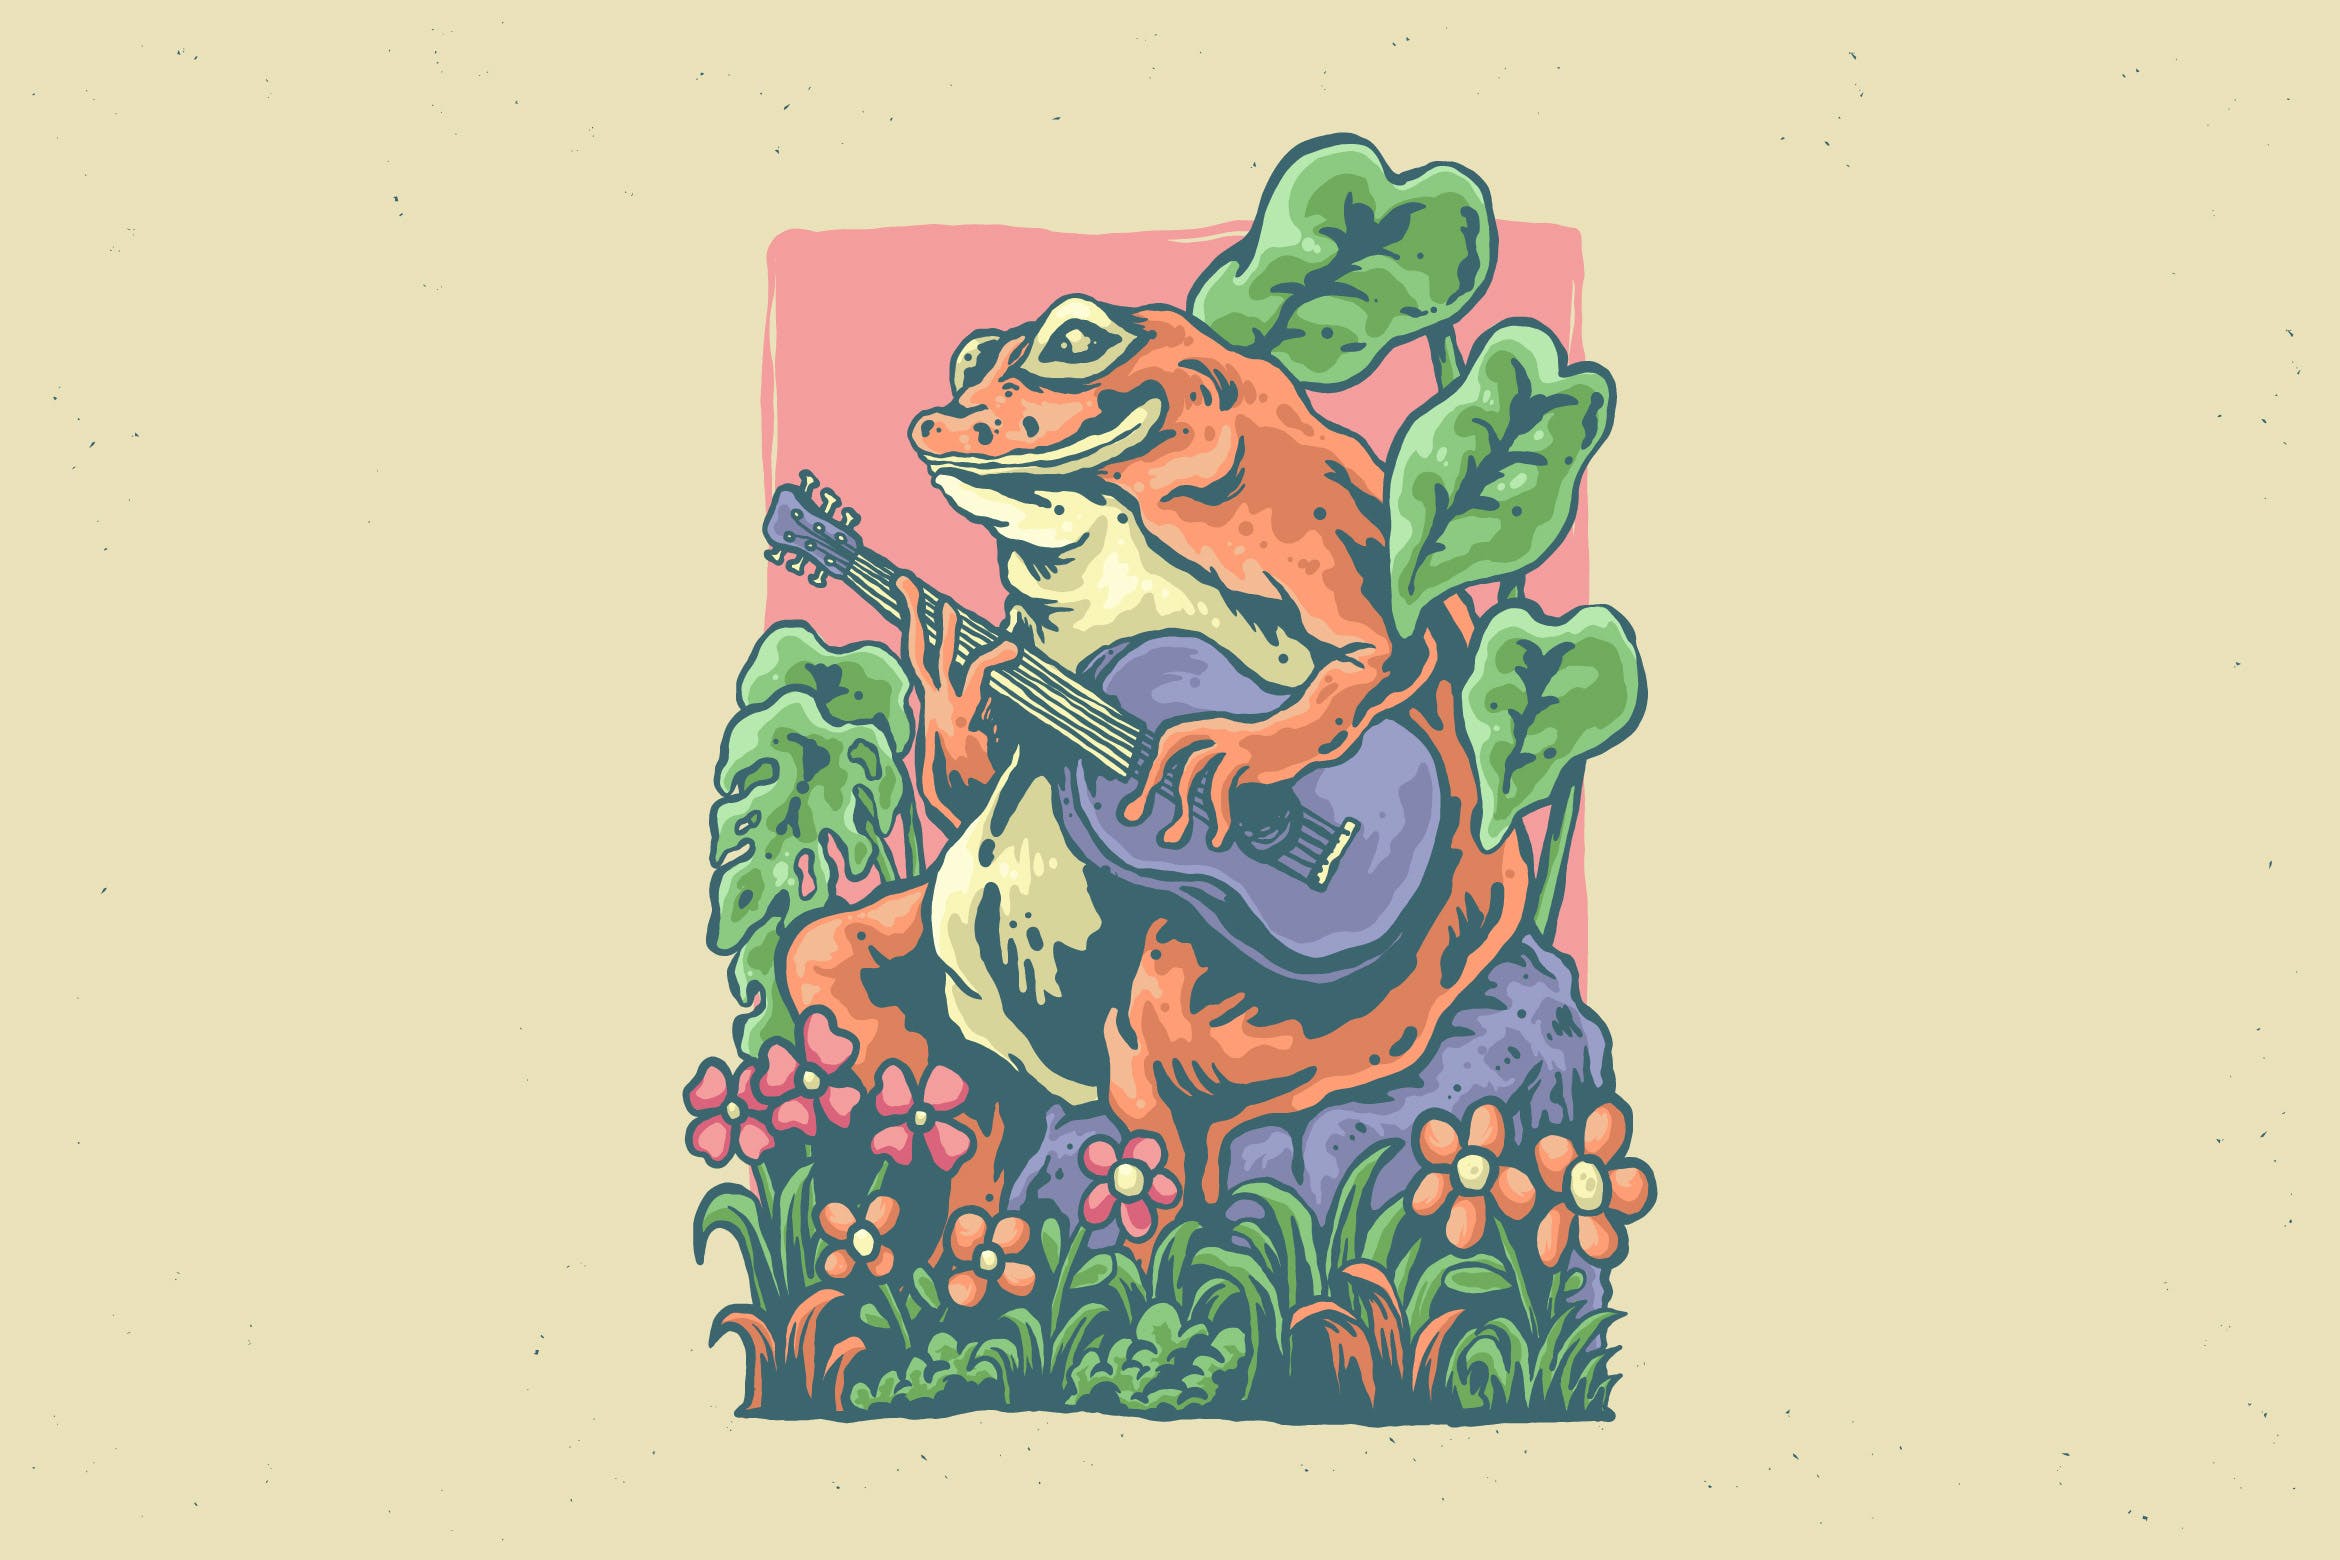 弹吉他青蛙设计插画 illustration of frog playing guitar design 图片素材 第1张